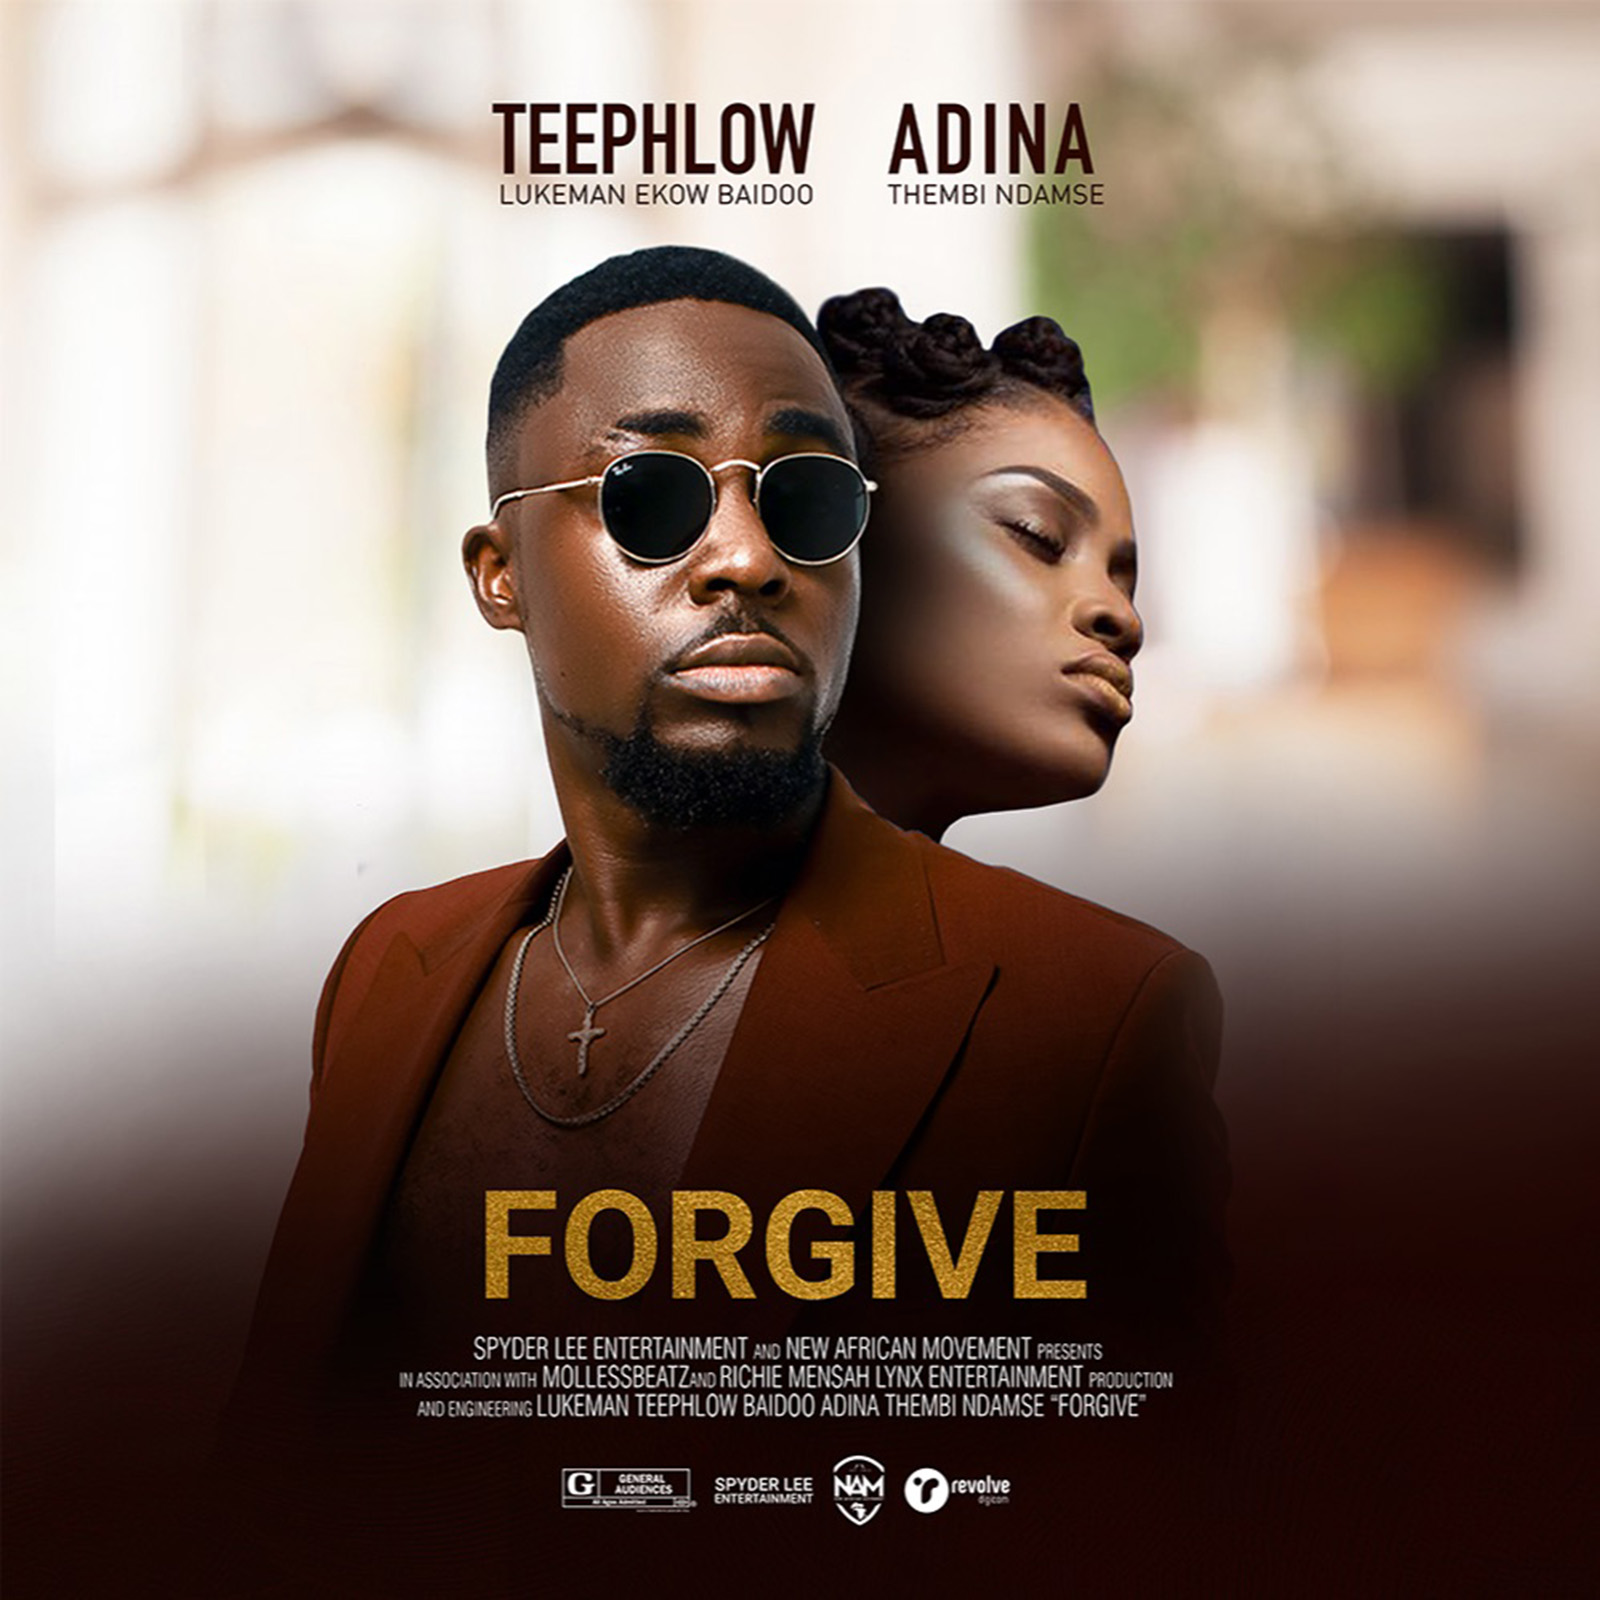 Forgive by TeePhlow feat. Adina